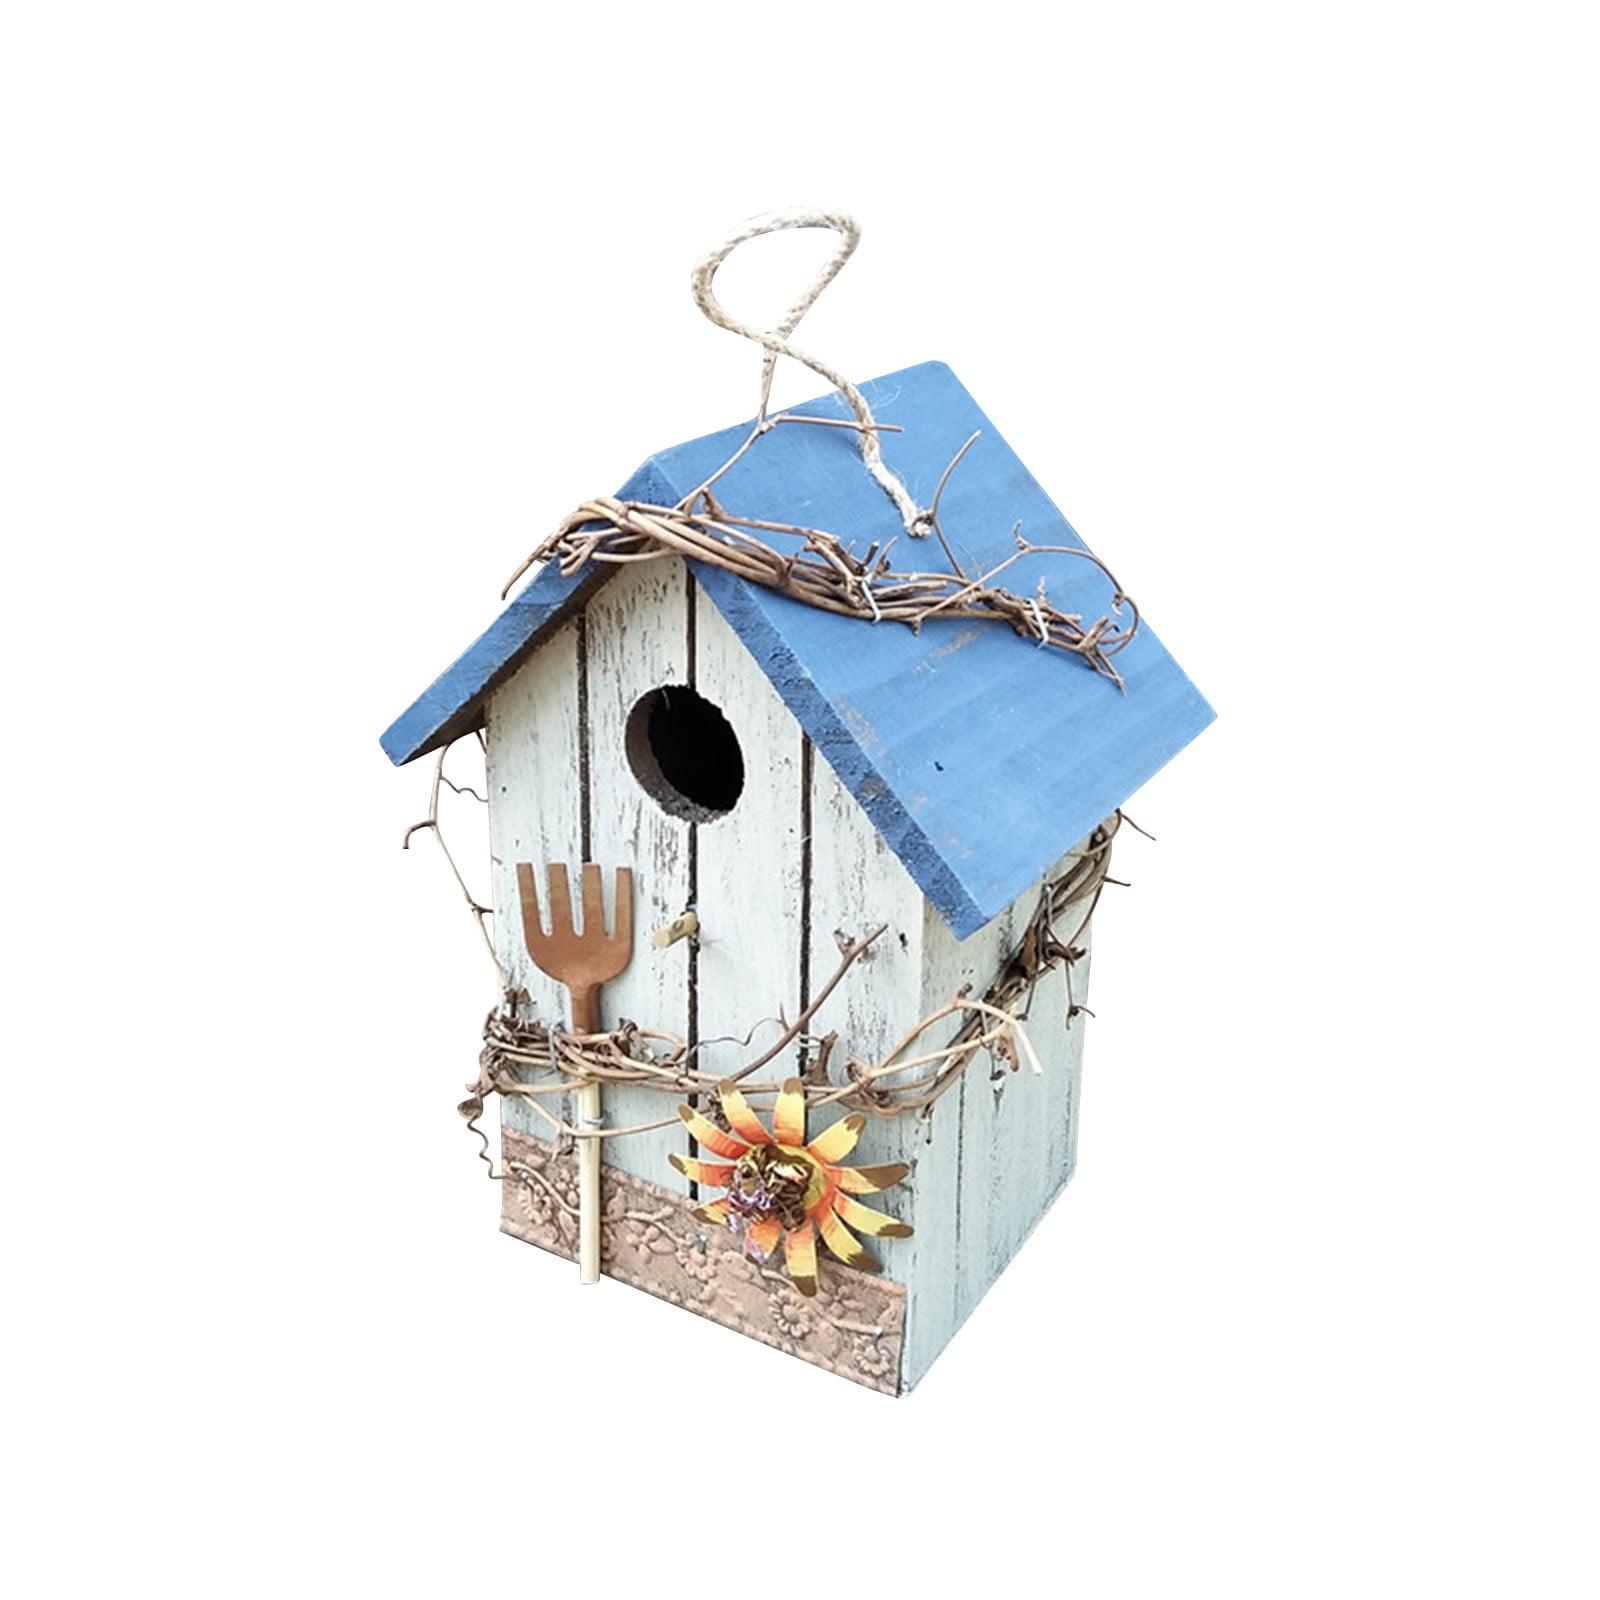 VP Home Flowerpot Bird House with Decorative Hand-Painted Mushroom Garden 